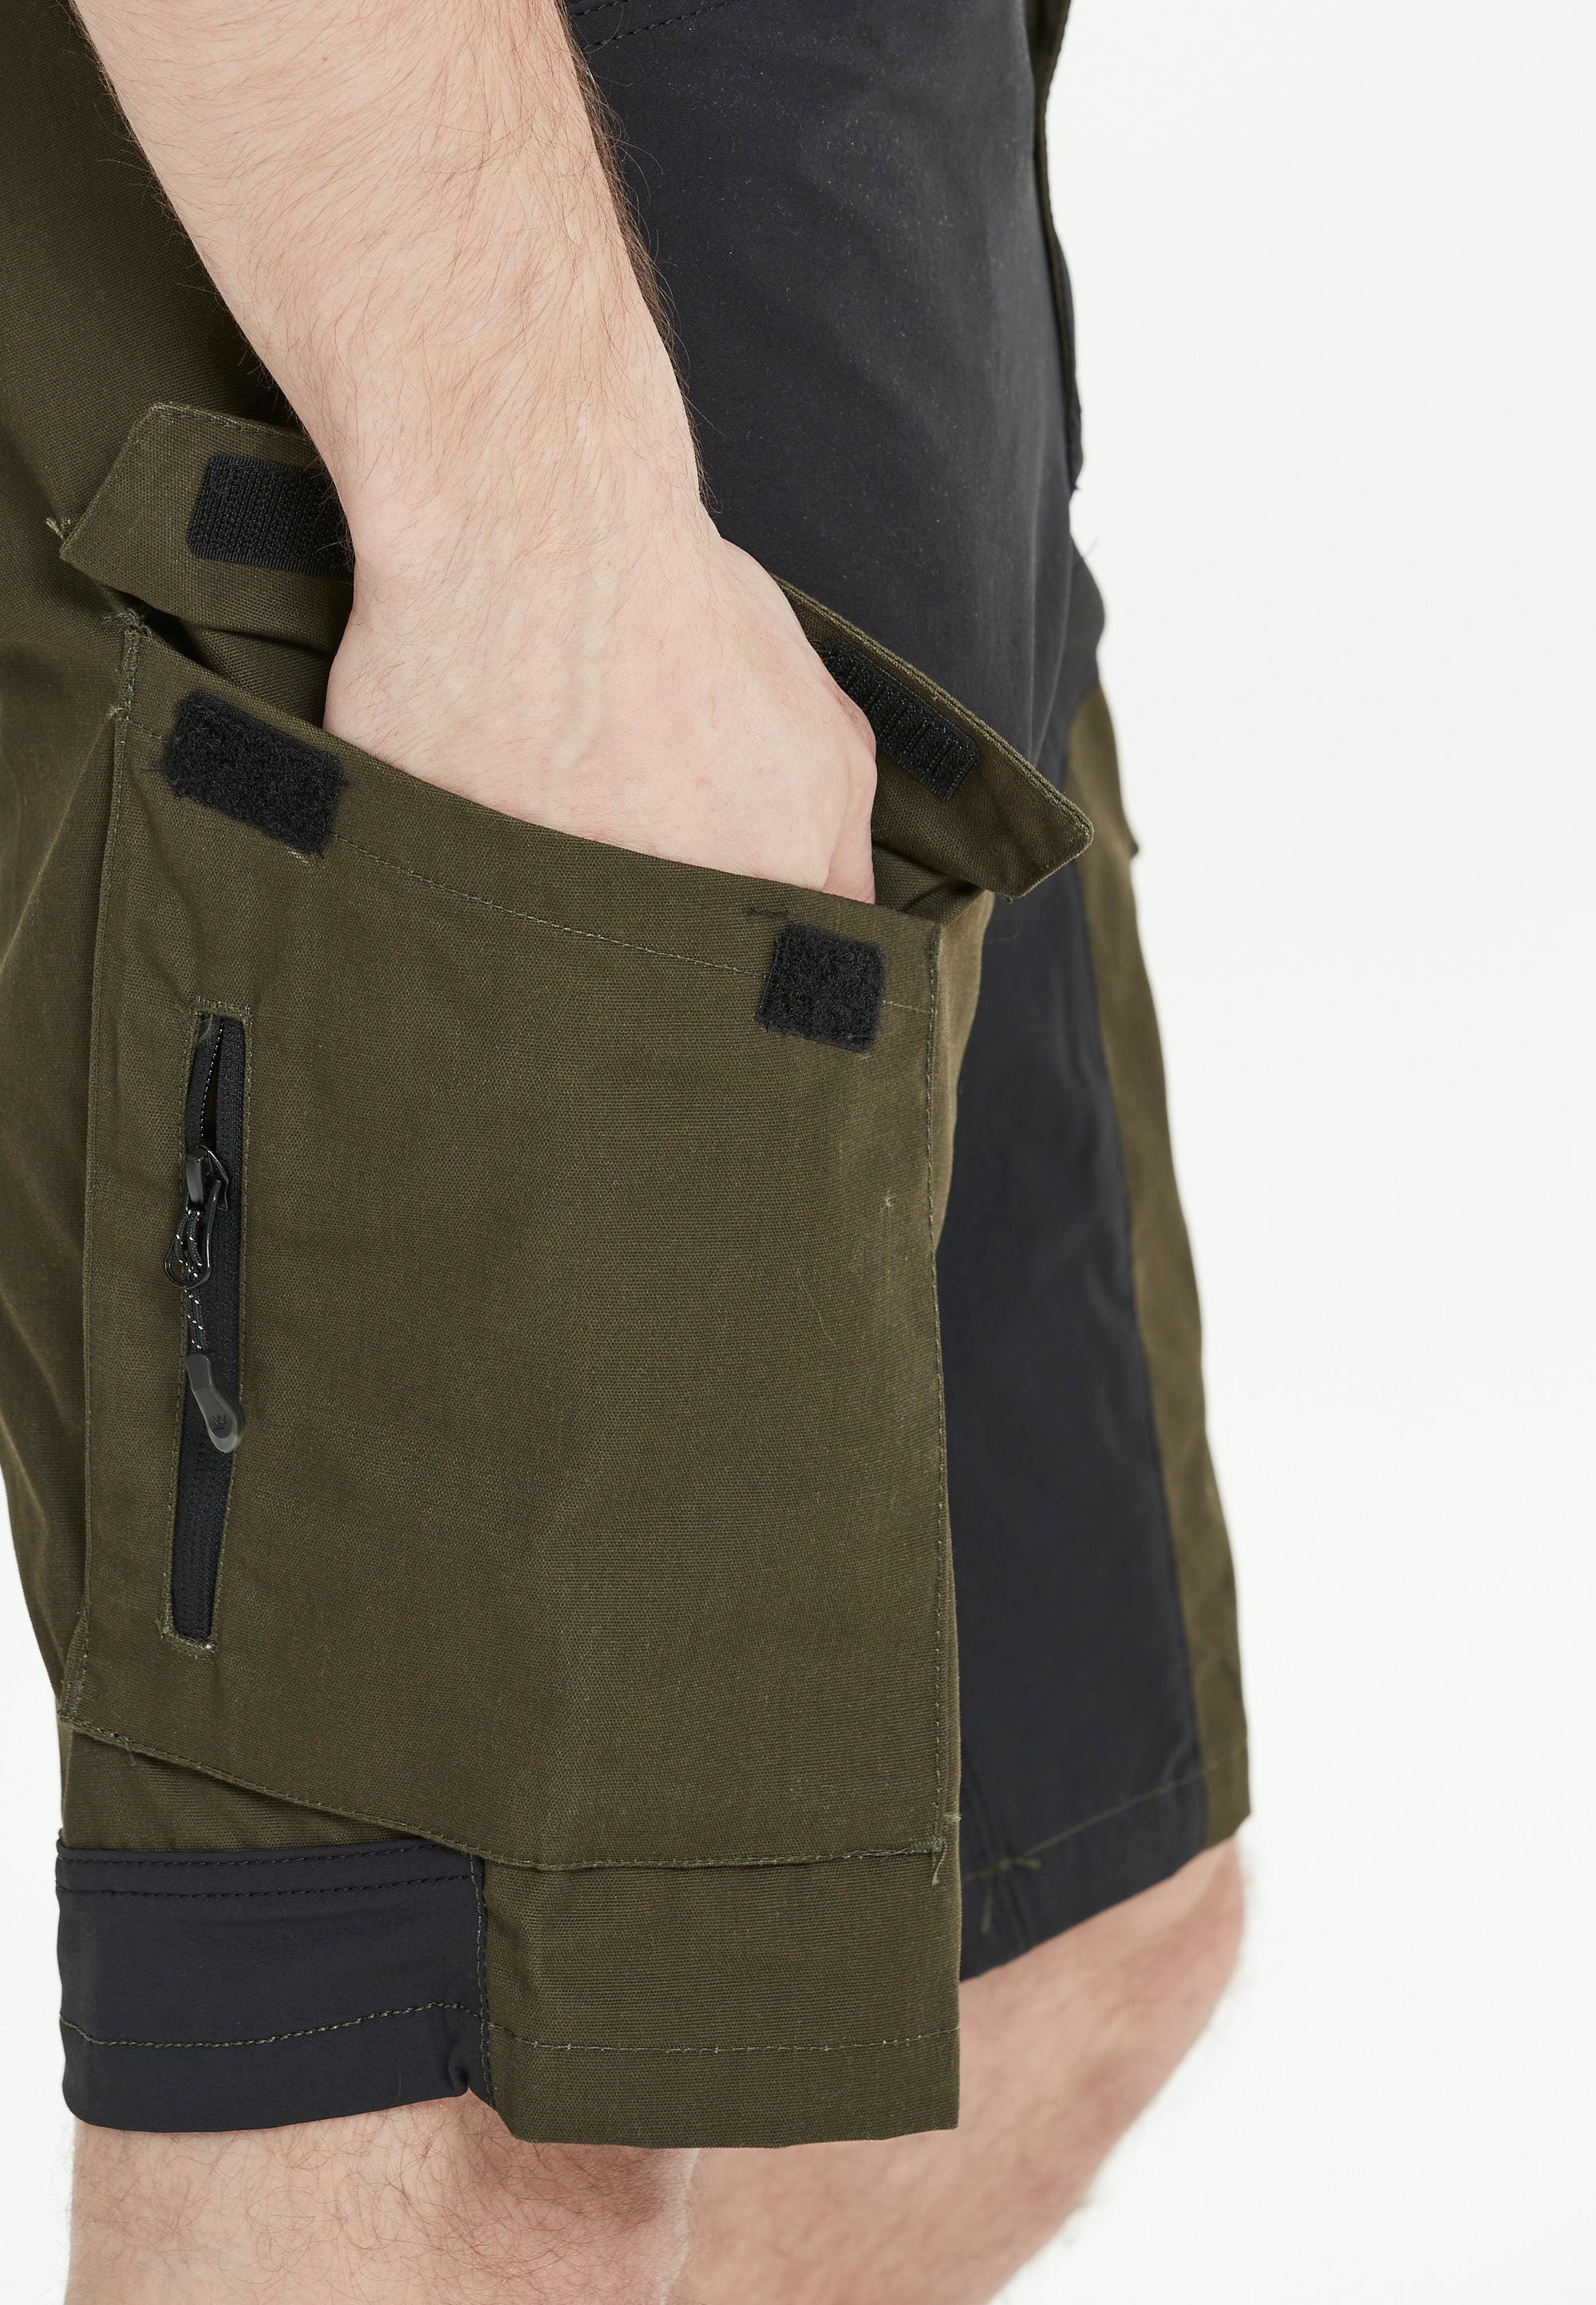 Materialmix Shorts mit WHISTLER ROMMY atmungsaktivem dunkelgrün-schwarz